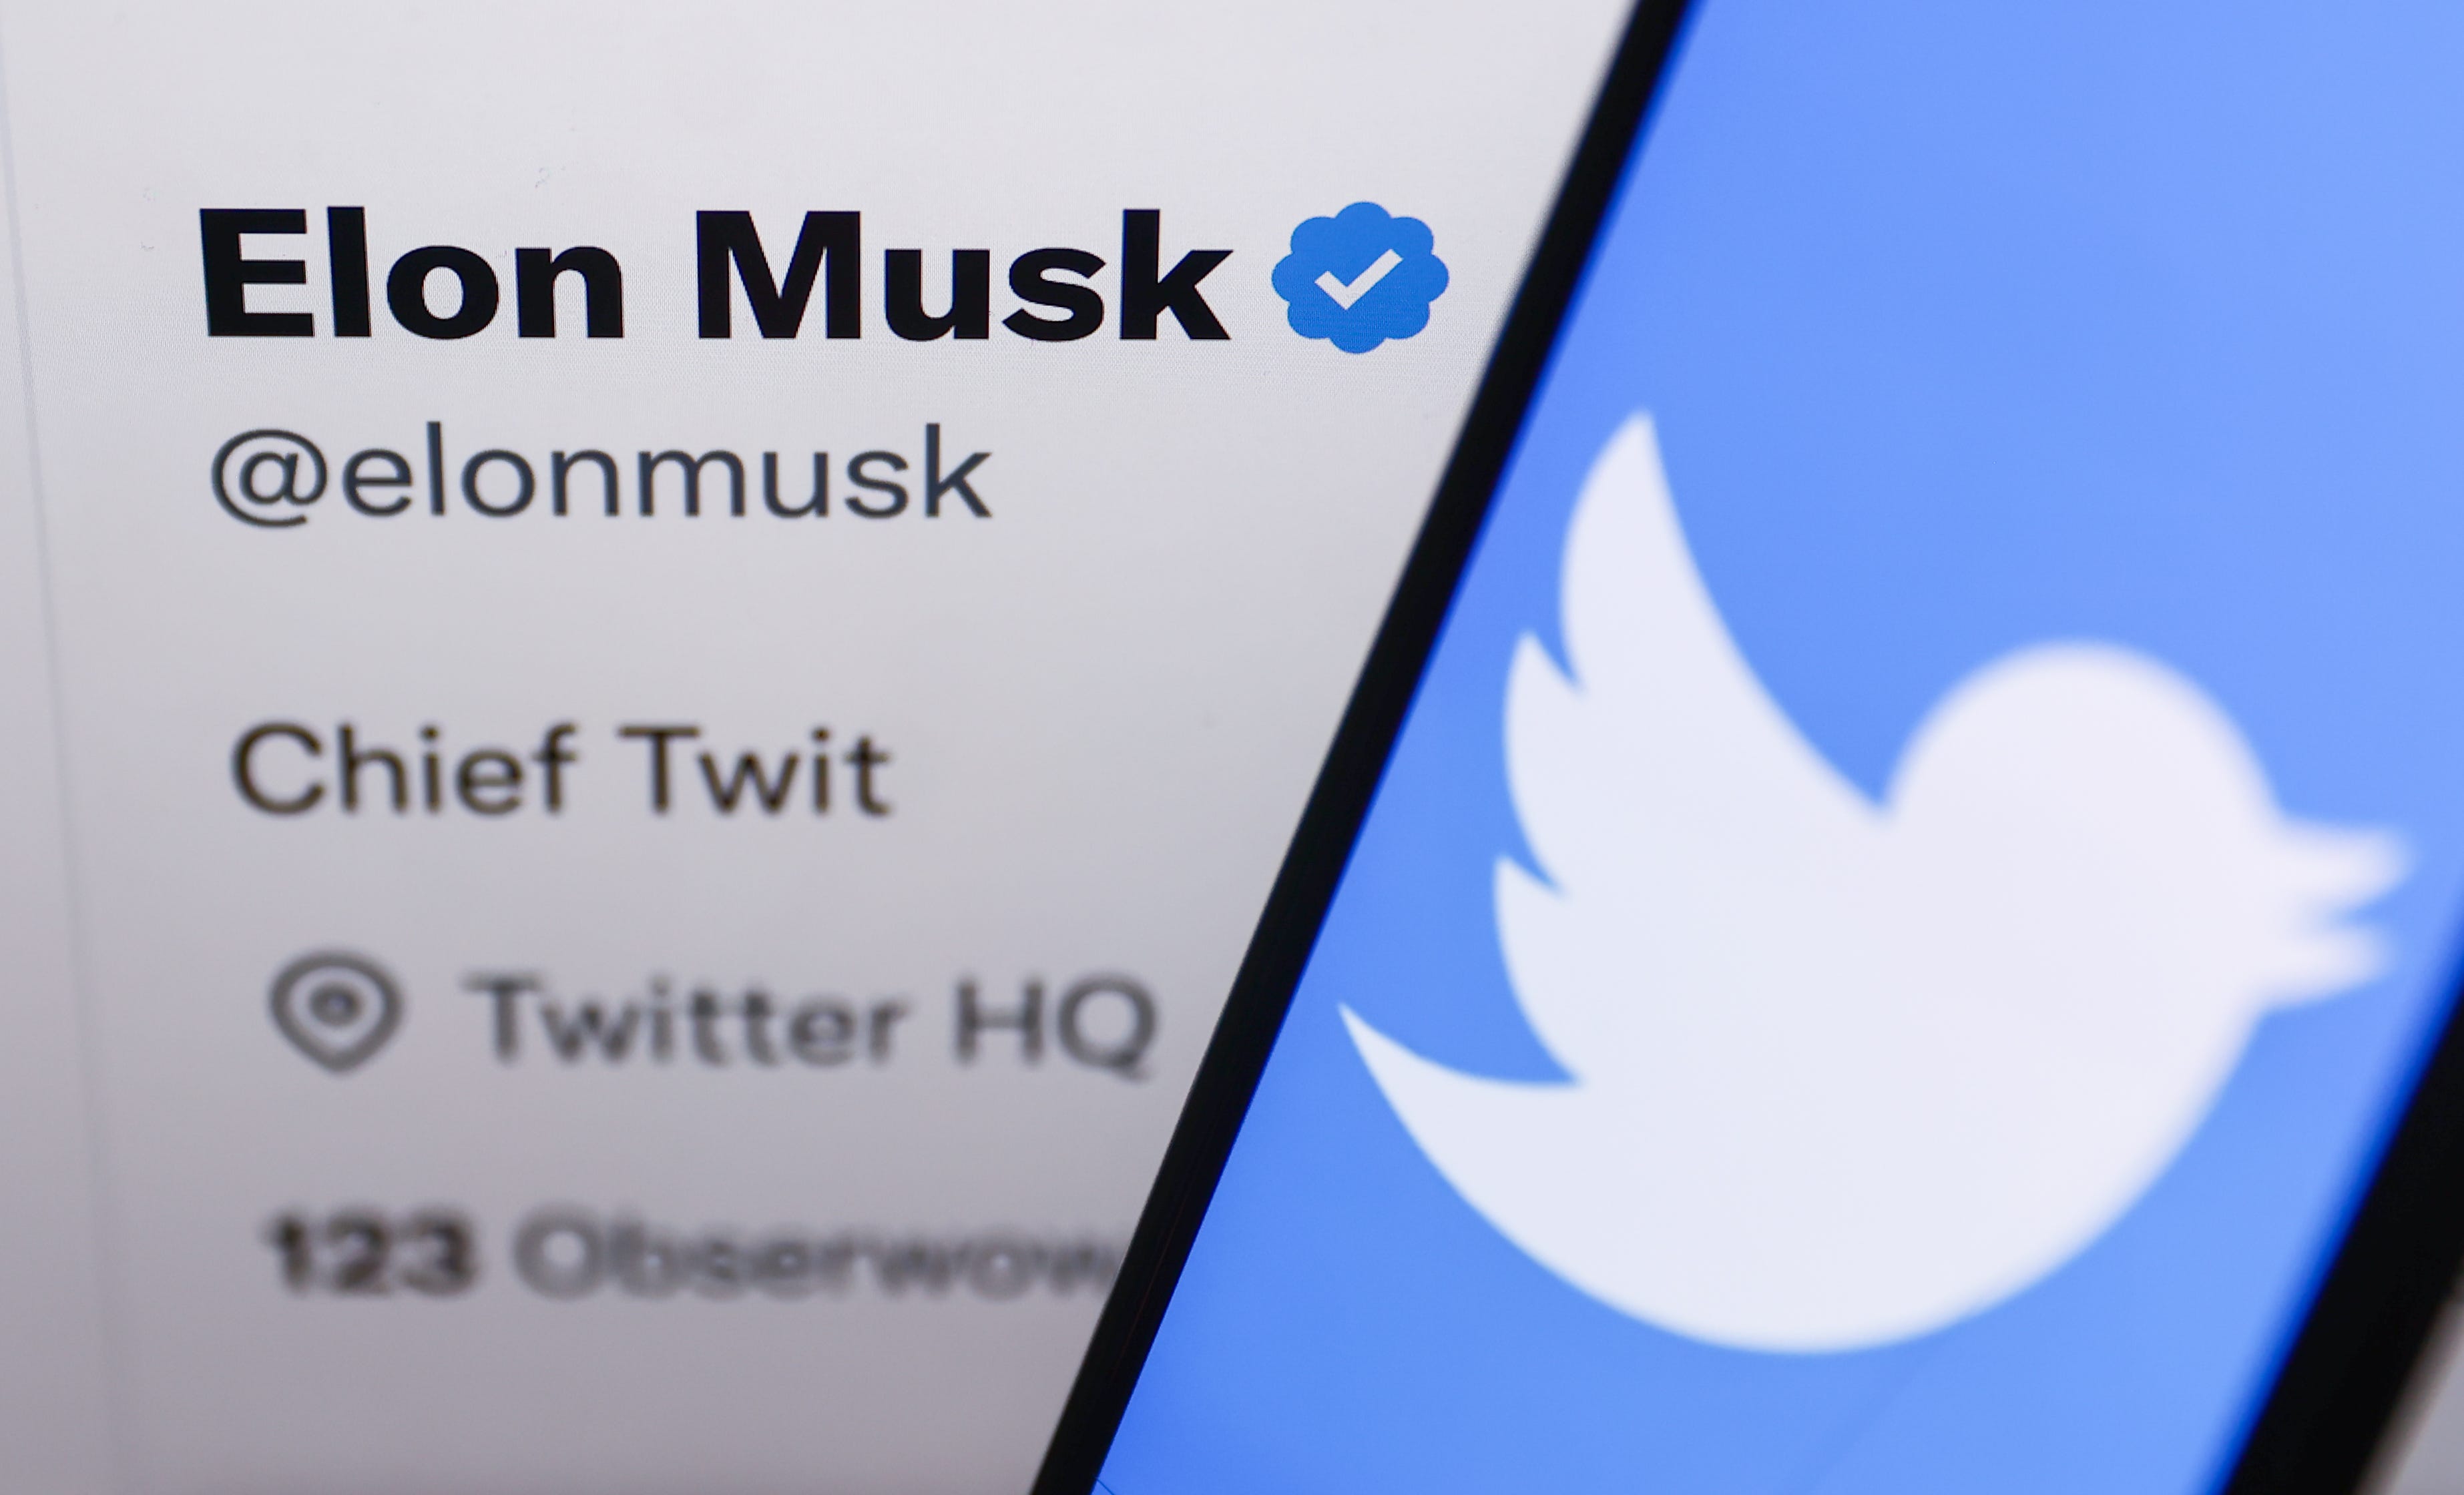 Elon Musk's Twitter account next to the Twitter logo